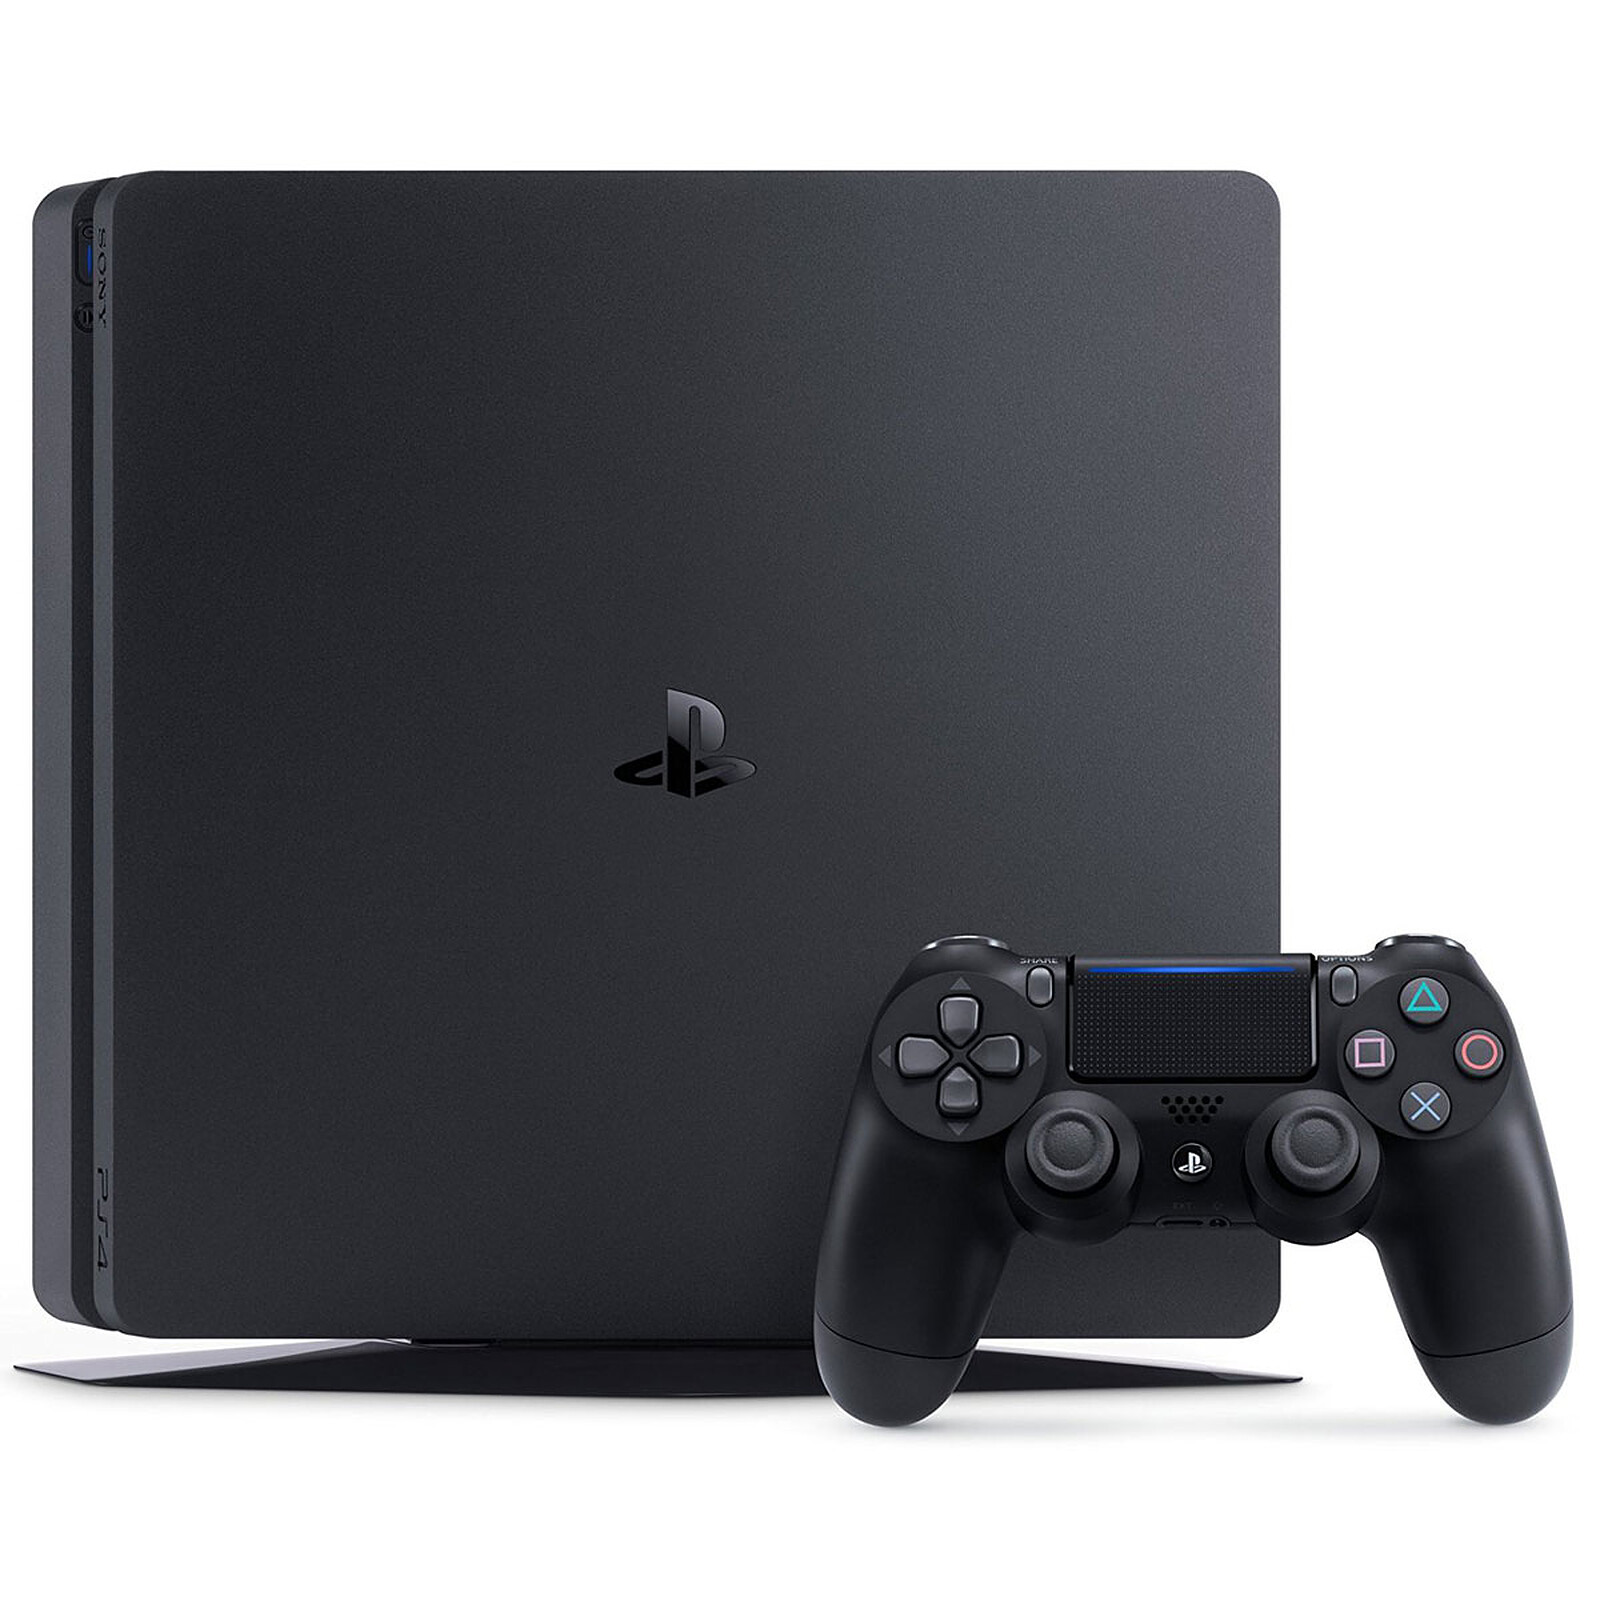 Sony PlayStation 4 Slim (500 GB) - Jet Black - Consola PS4 - LDLC